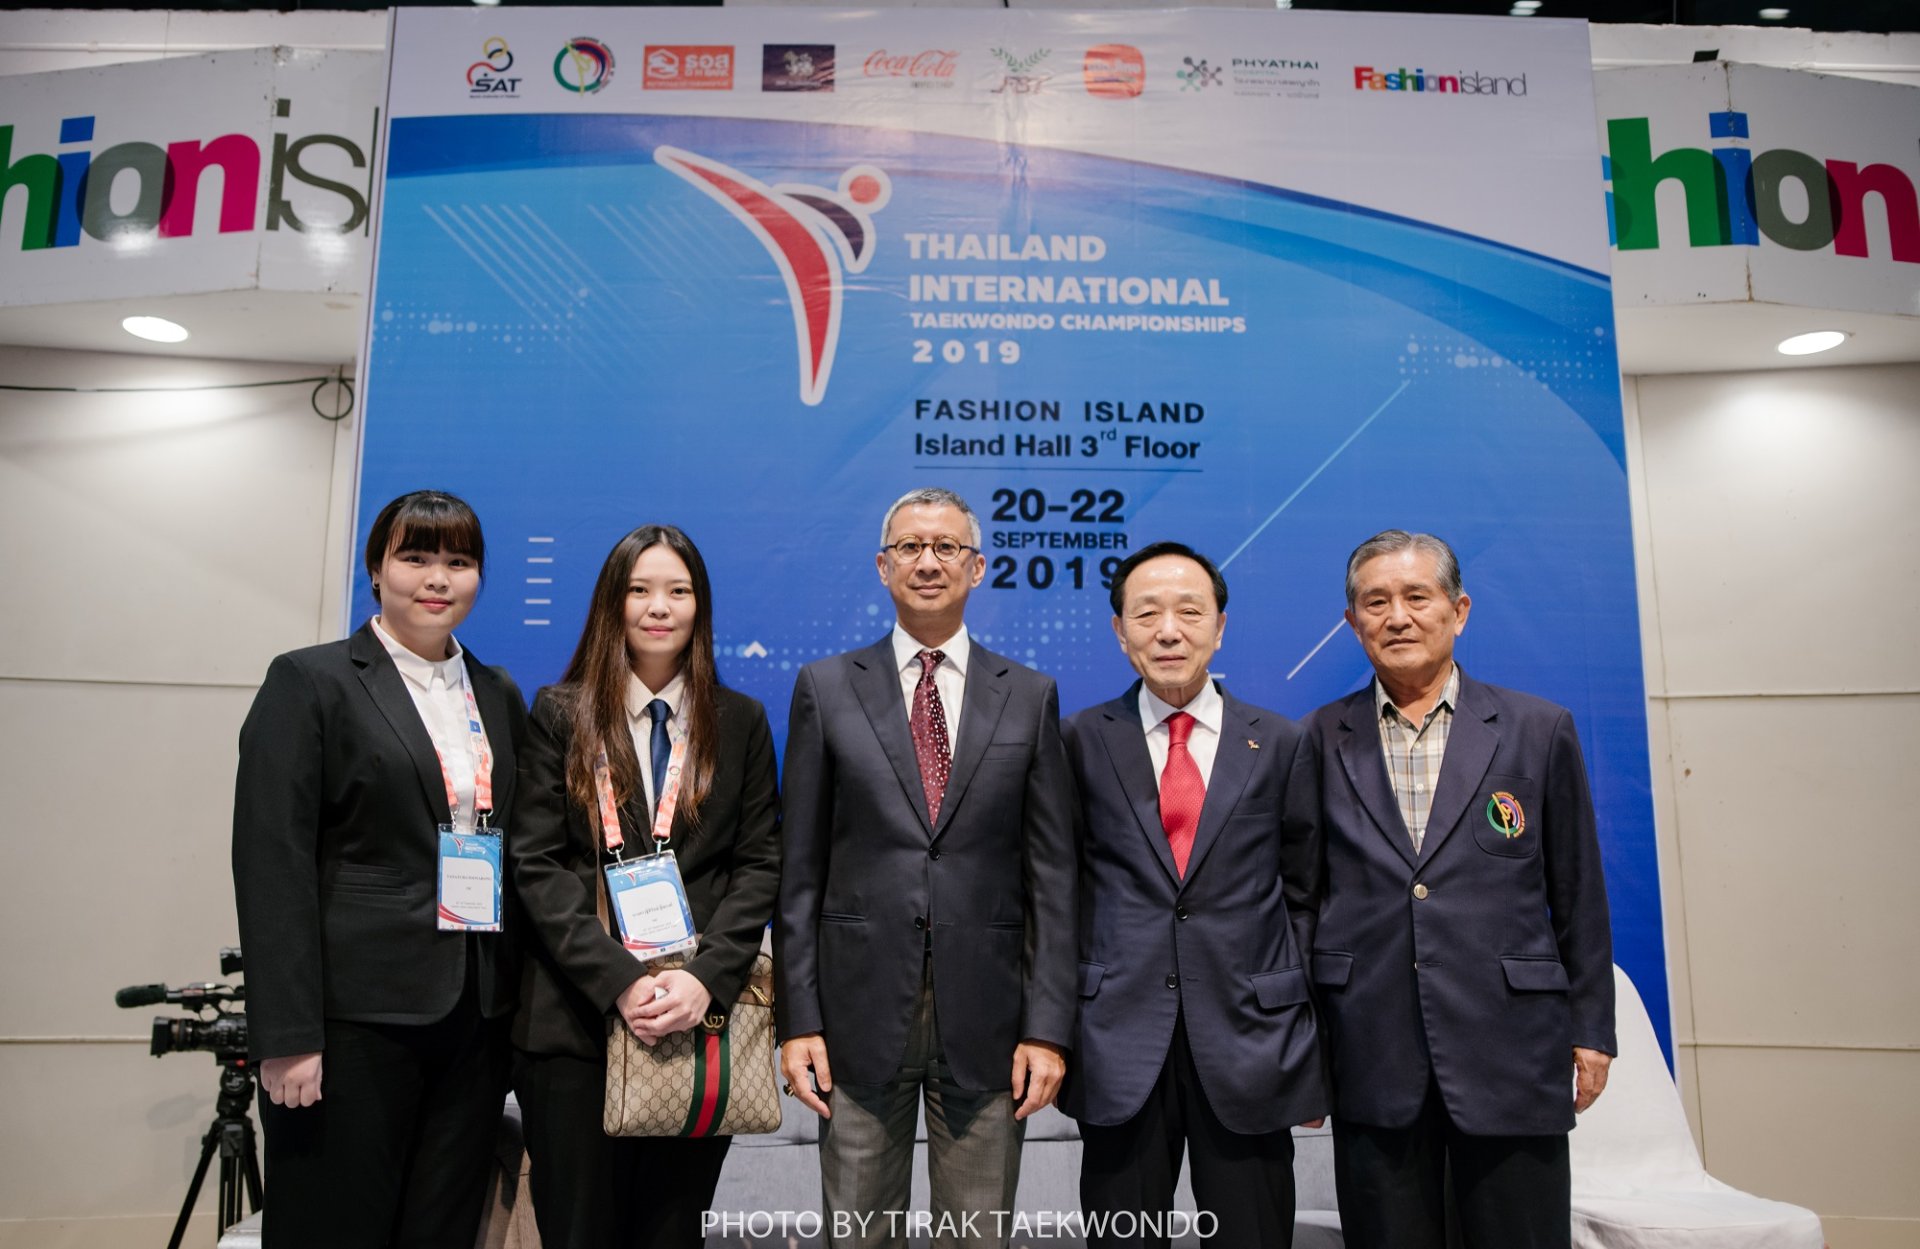 THAILAND INTERNATIONAL TAEKWONDO CHAMPIONSHIP 2019